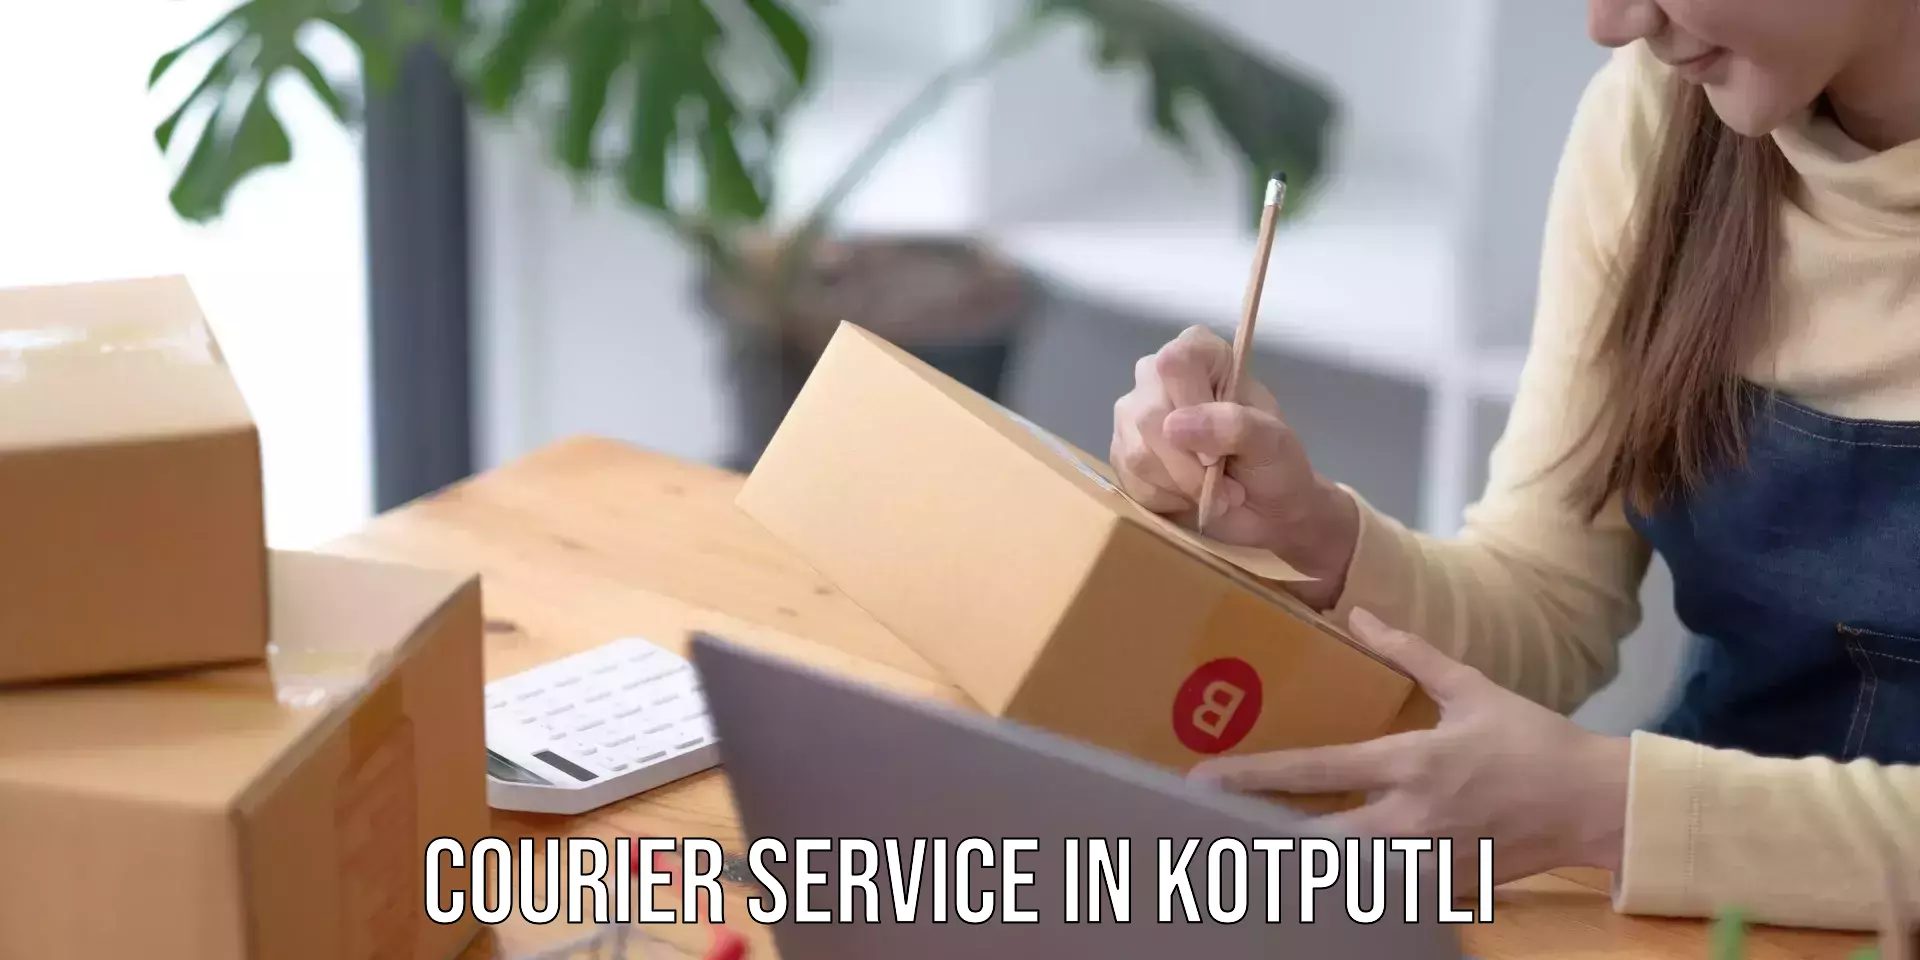 Modern delivery methods in Kotputli